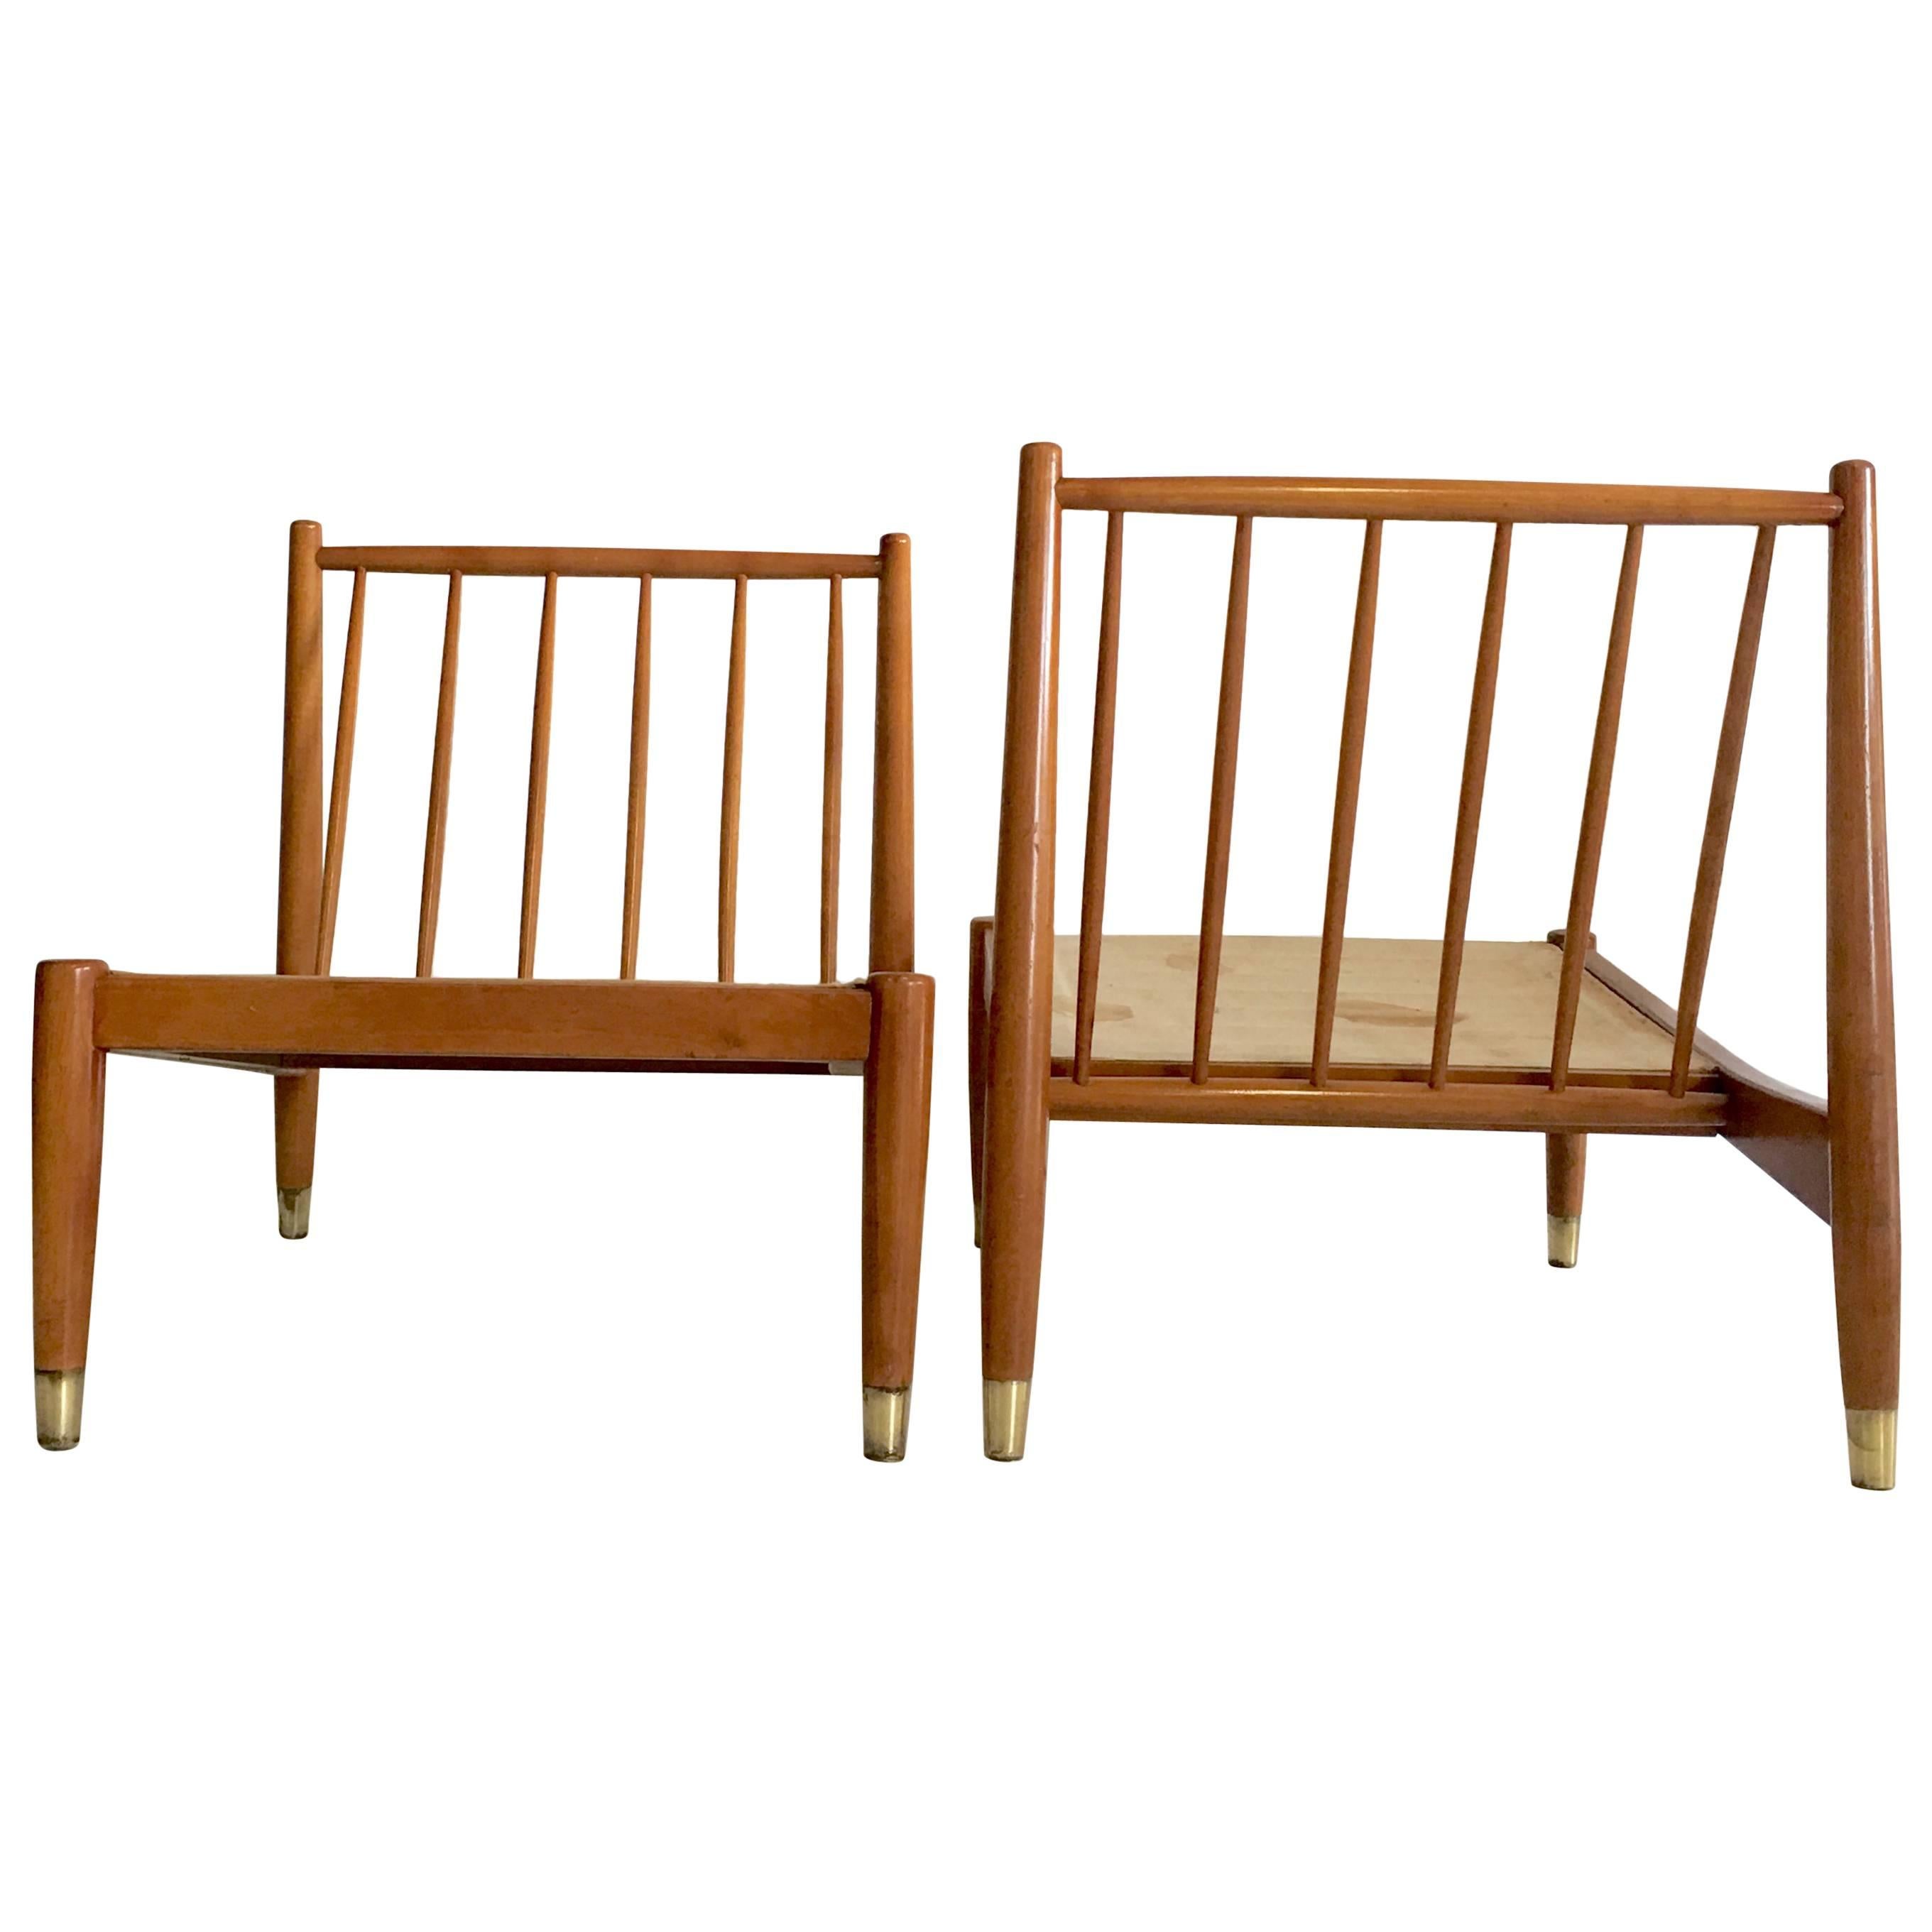 Mid 20th-Century Scandinavian Modern Pair Of Beech Wood Slipper Chairs For Sale